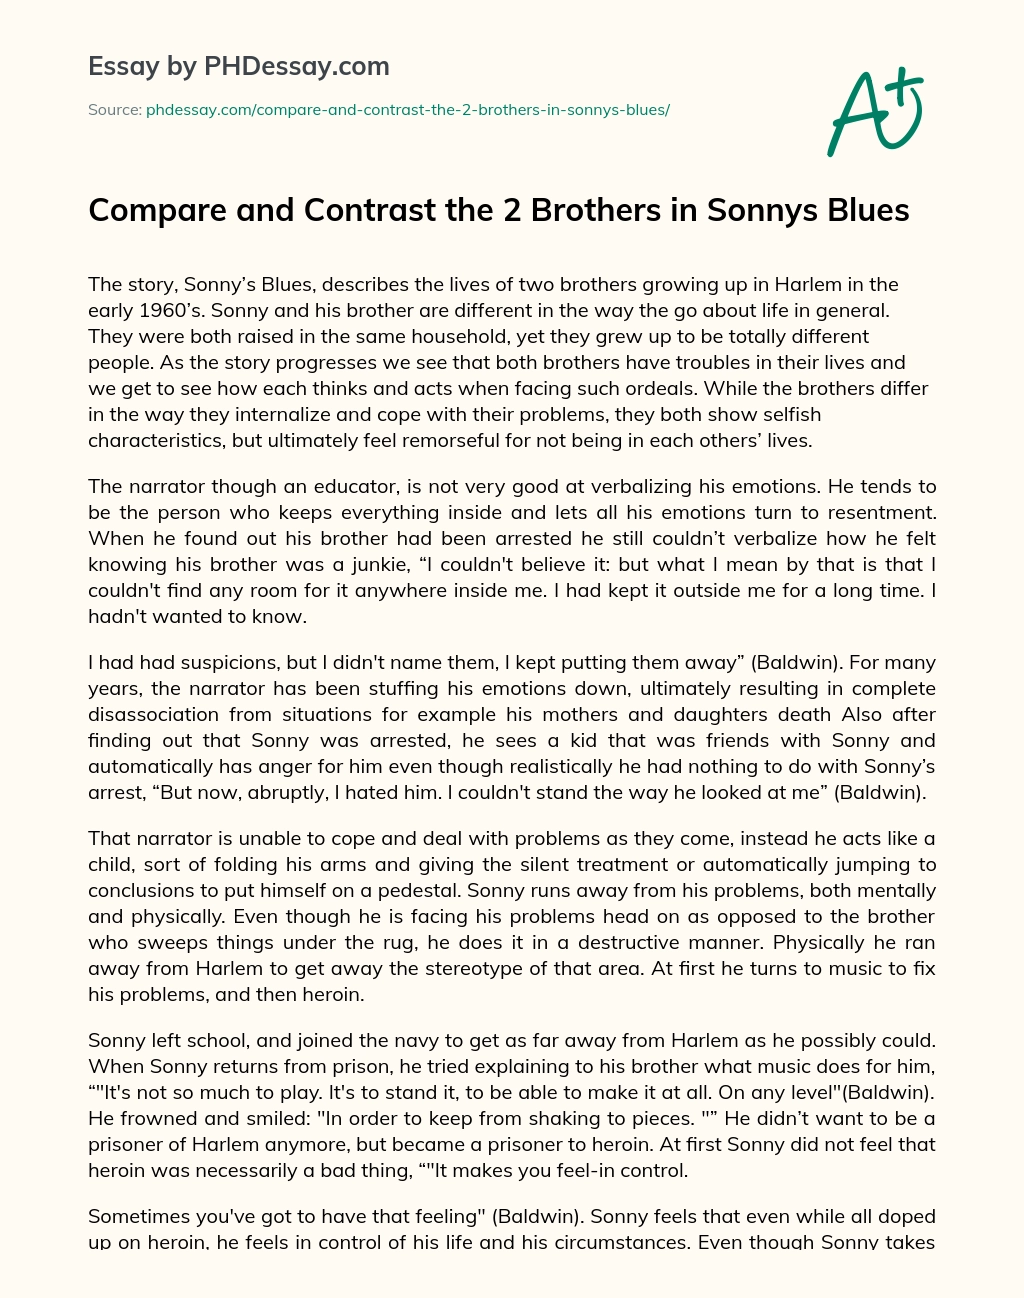 sonny blues analysis